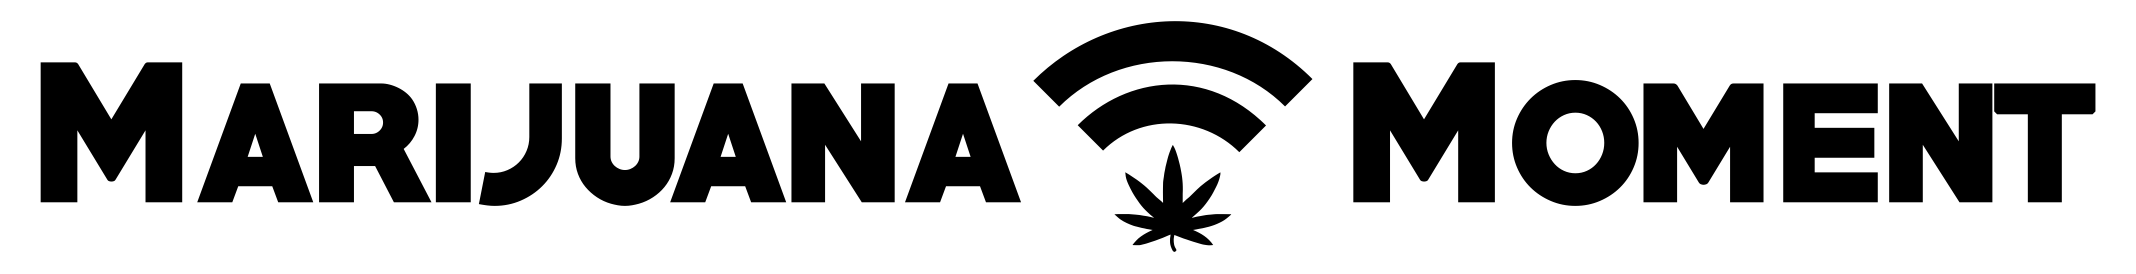 marijuana moment logo banner 2